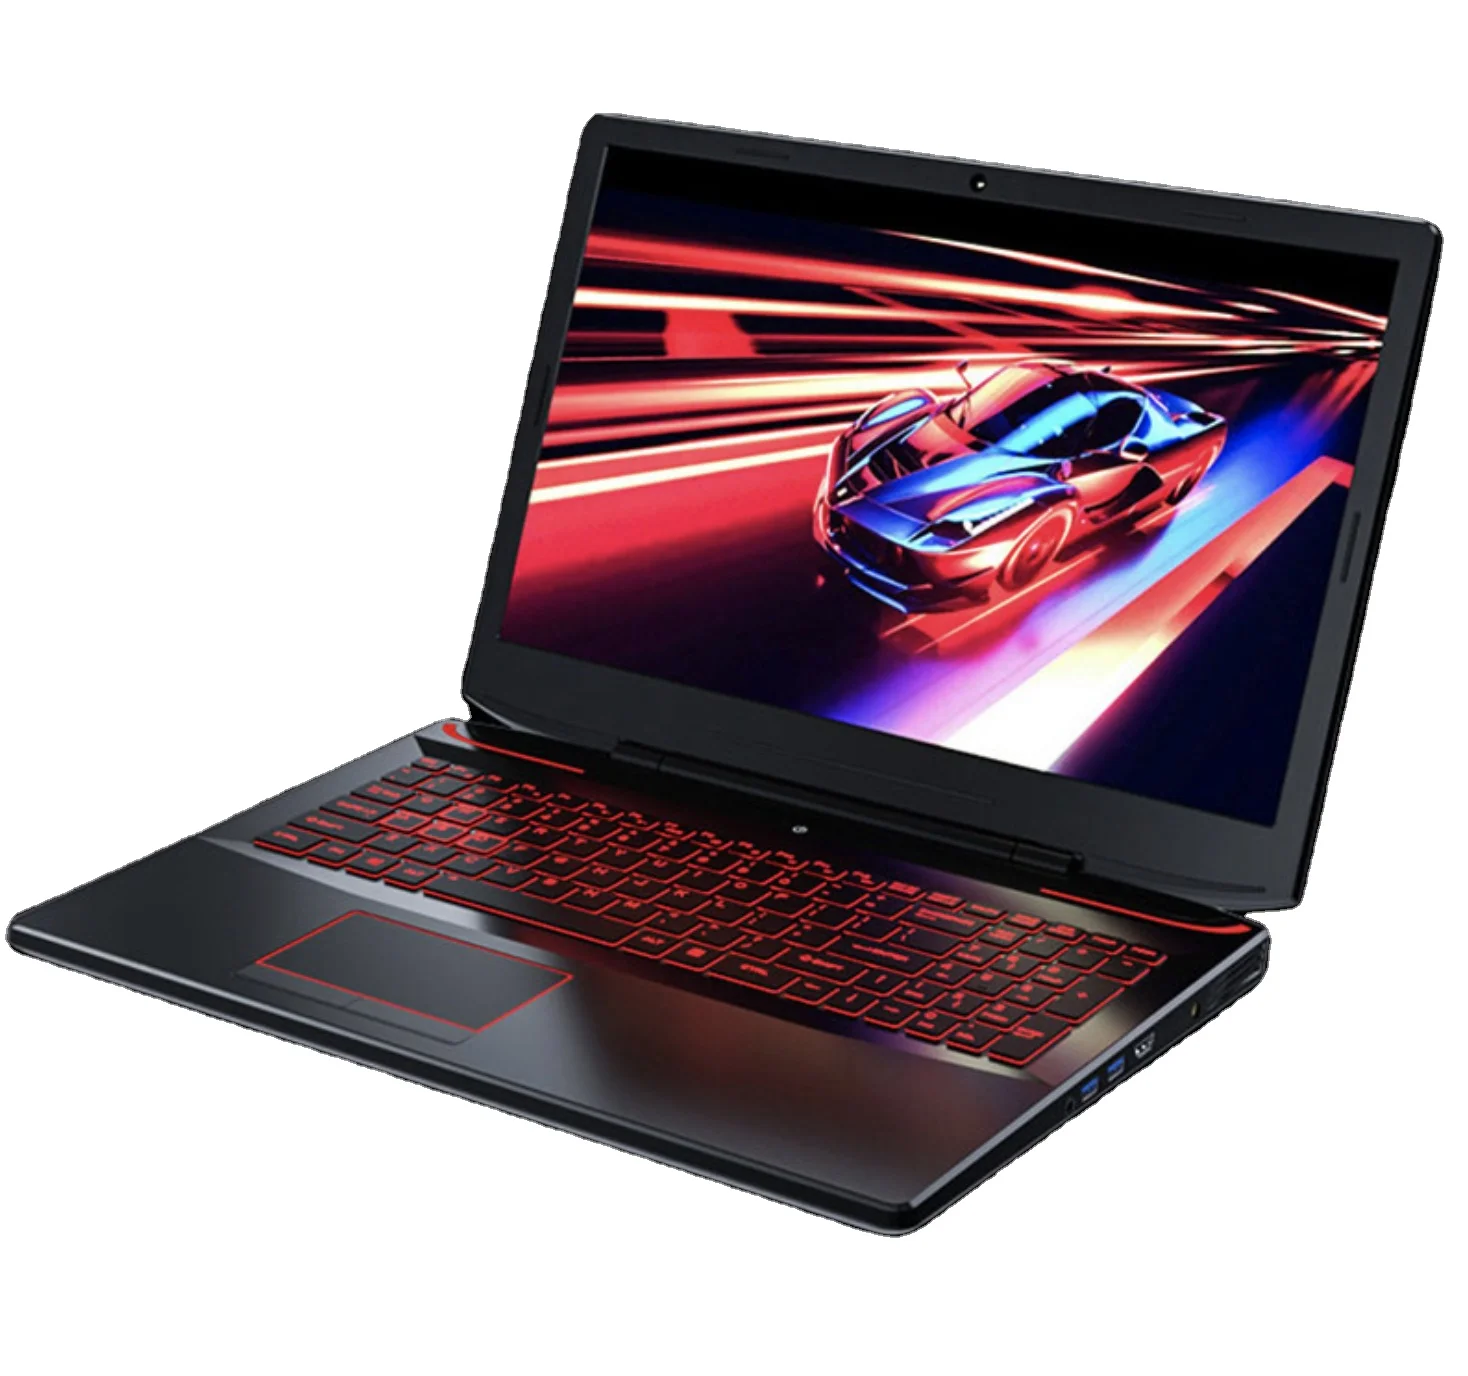 skam Grine væske Source New Design Intel Core i7 Laptop Computer Win 10 GTX 1060 6GB  Discrete Graphics Card Lap top Laptop For Gaming on m.alibaba.com